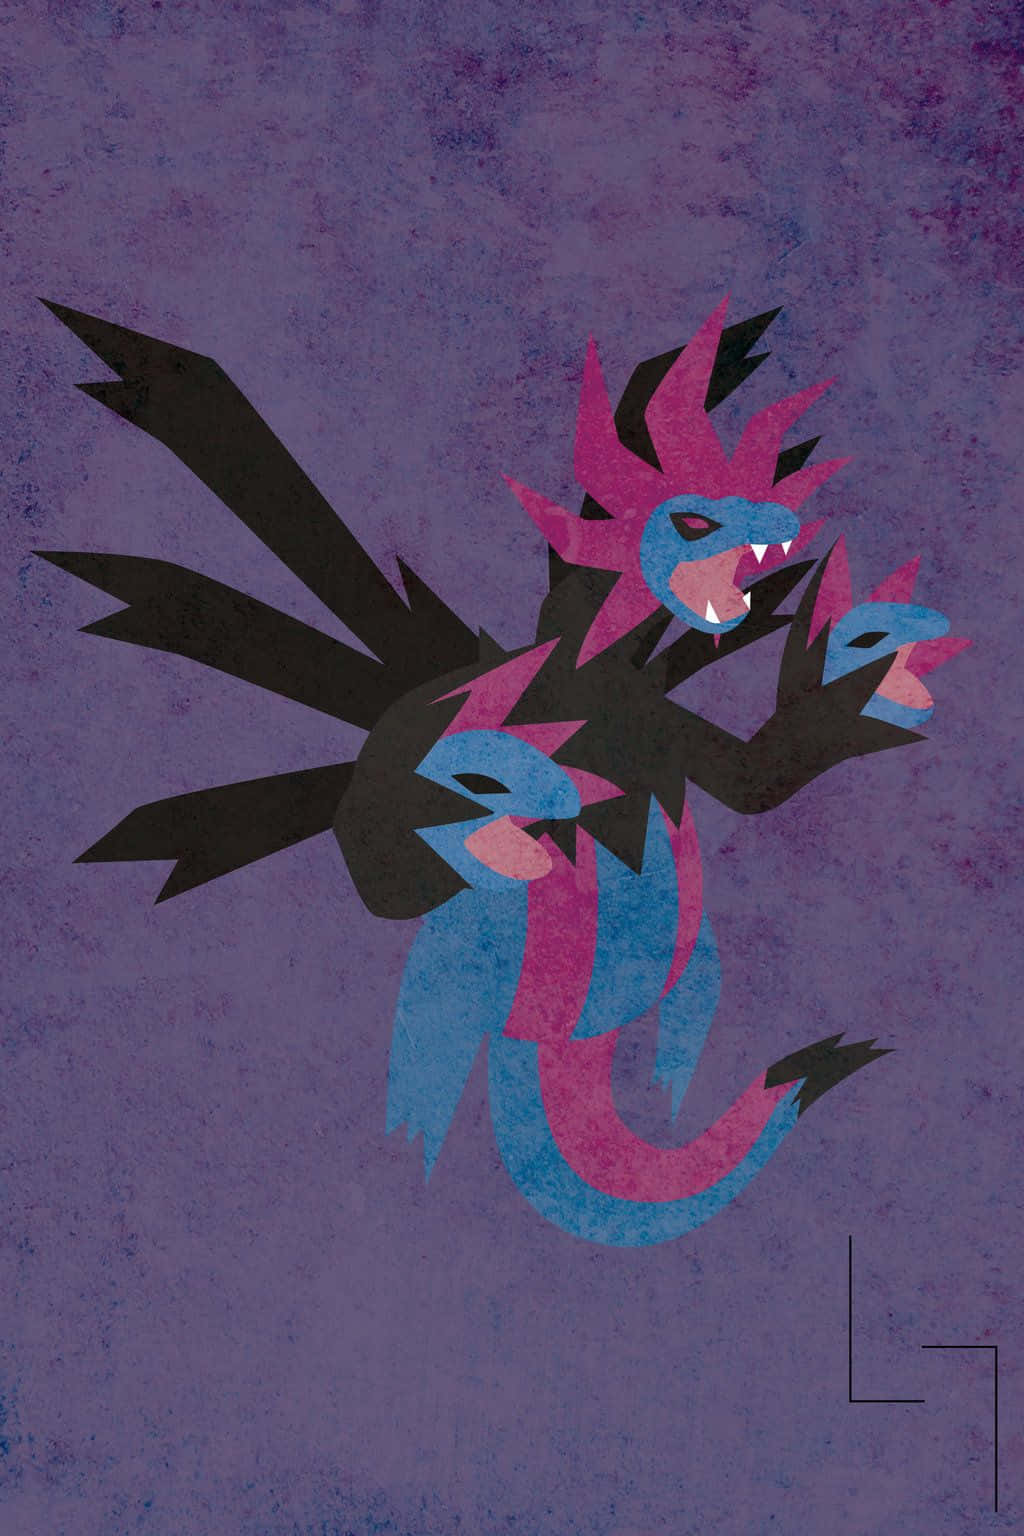 Majestic Hydreigon, the Three-Headed Dragon Pokemon Wallpaper